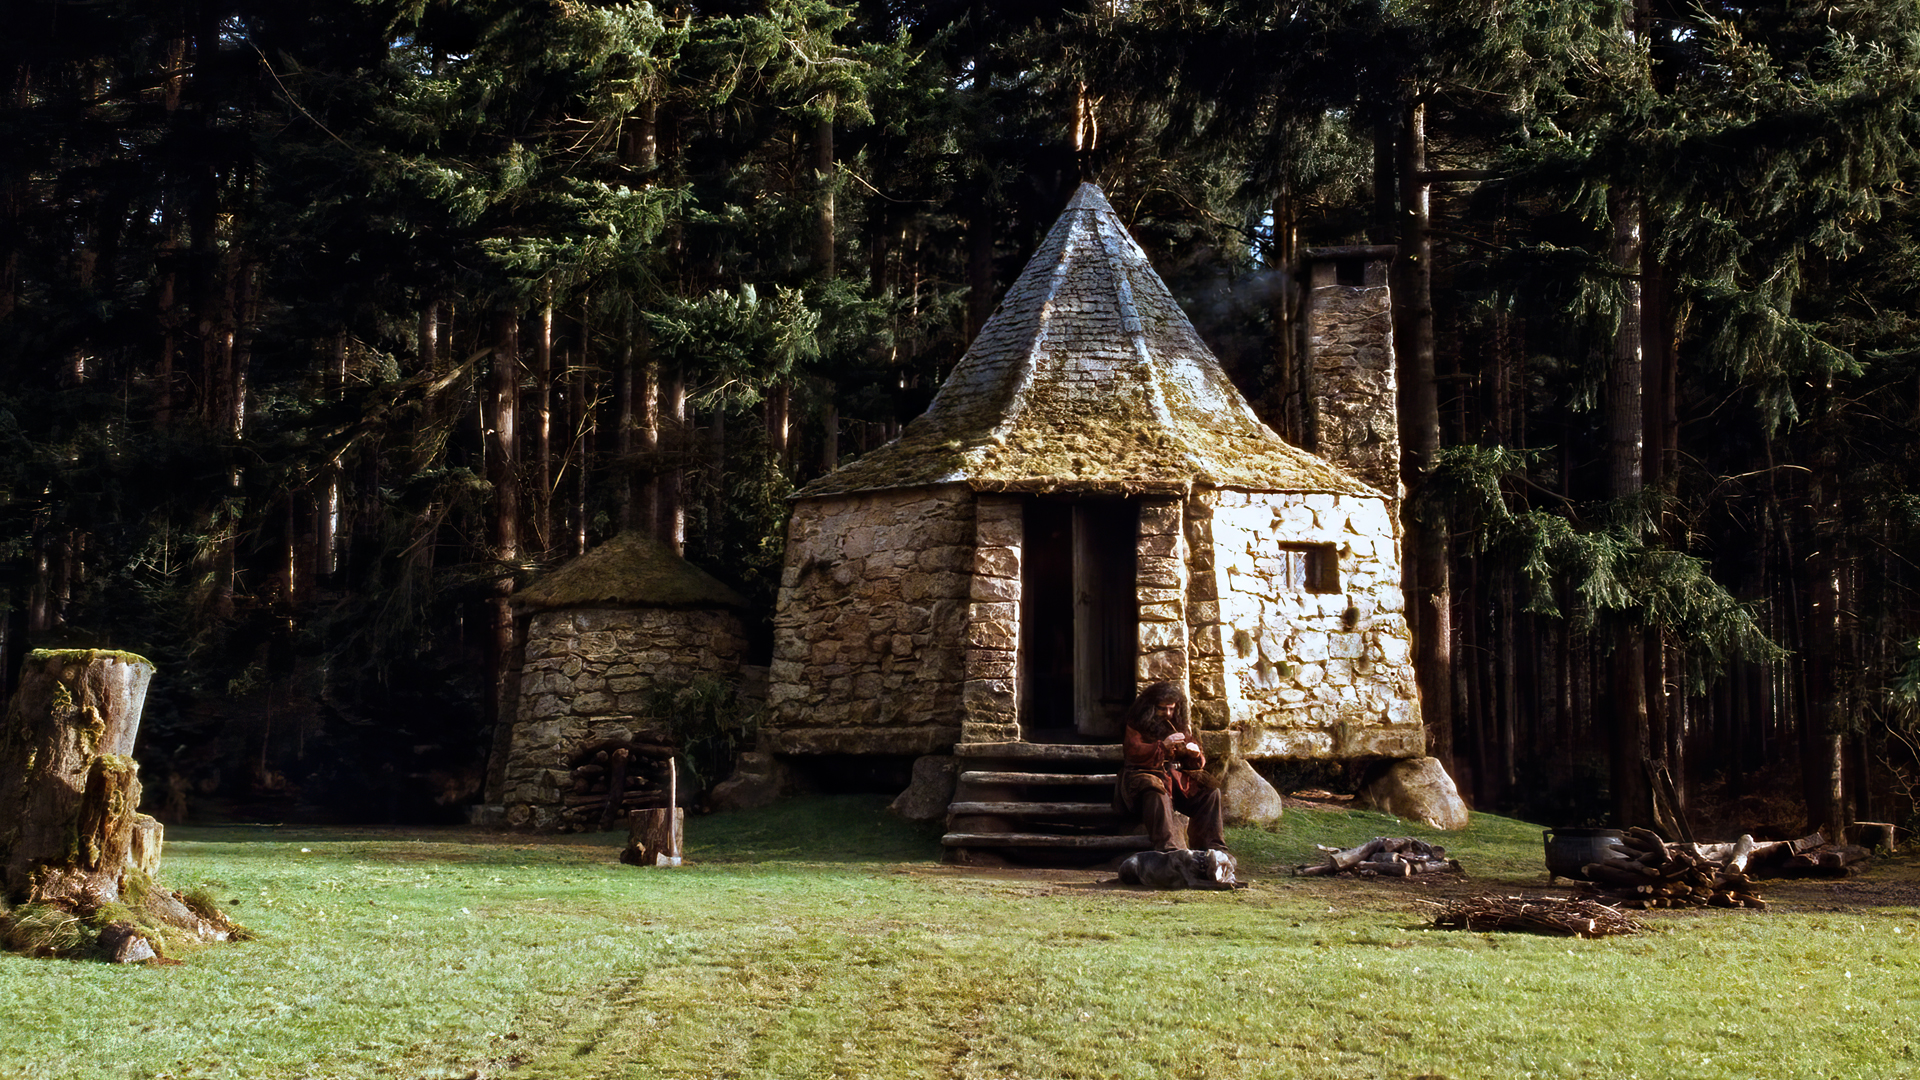 General 1920x1080 Harry Potter and the Sorcerer's Stone film stills movies Rubeus Hagrid Robbie Coltrane hut grass trees dog wood